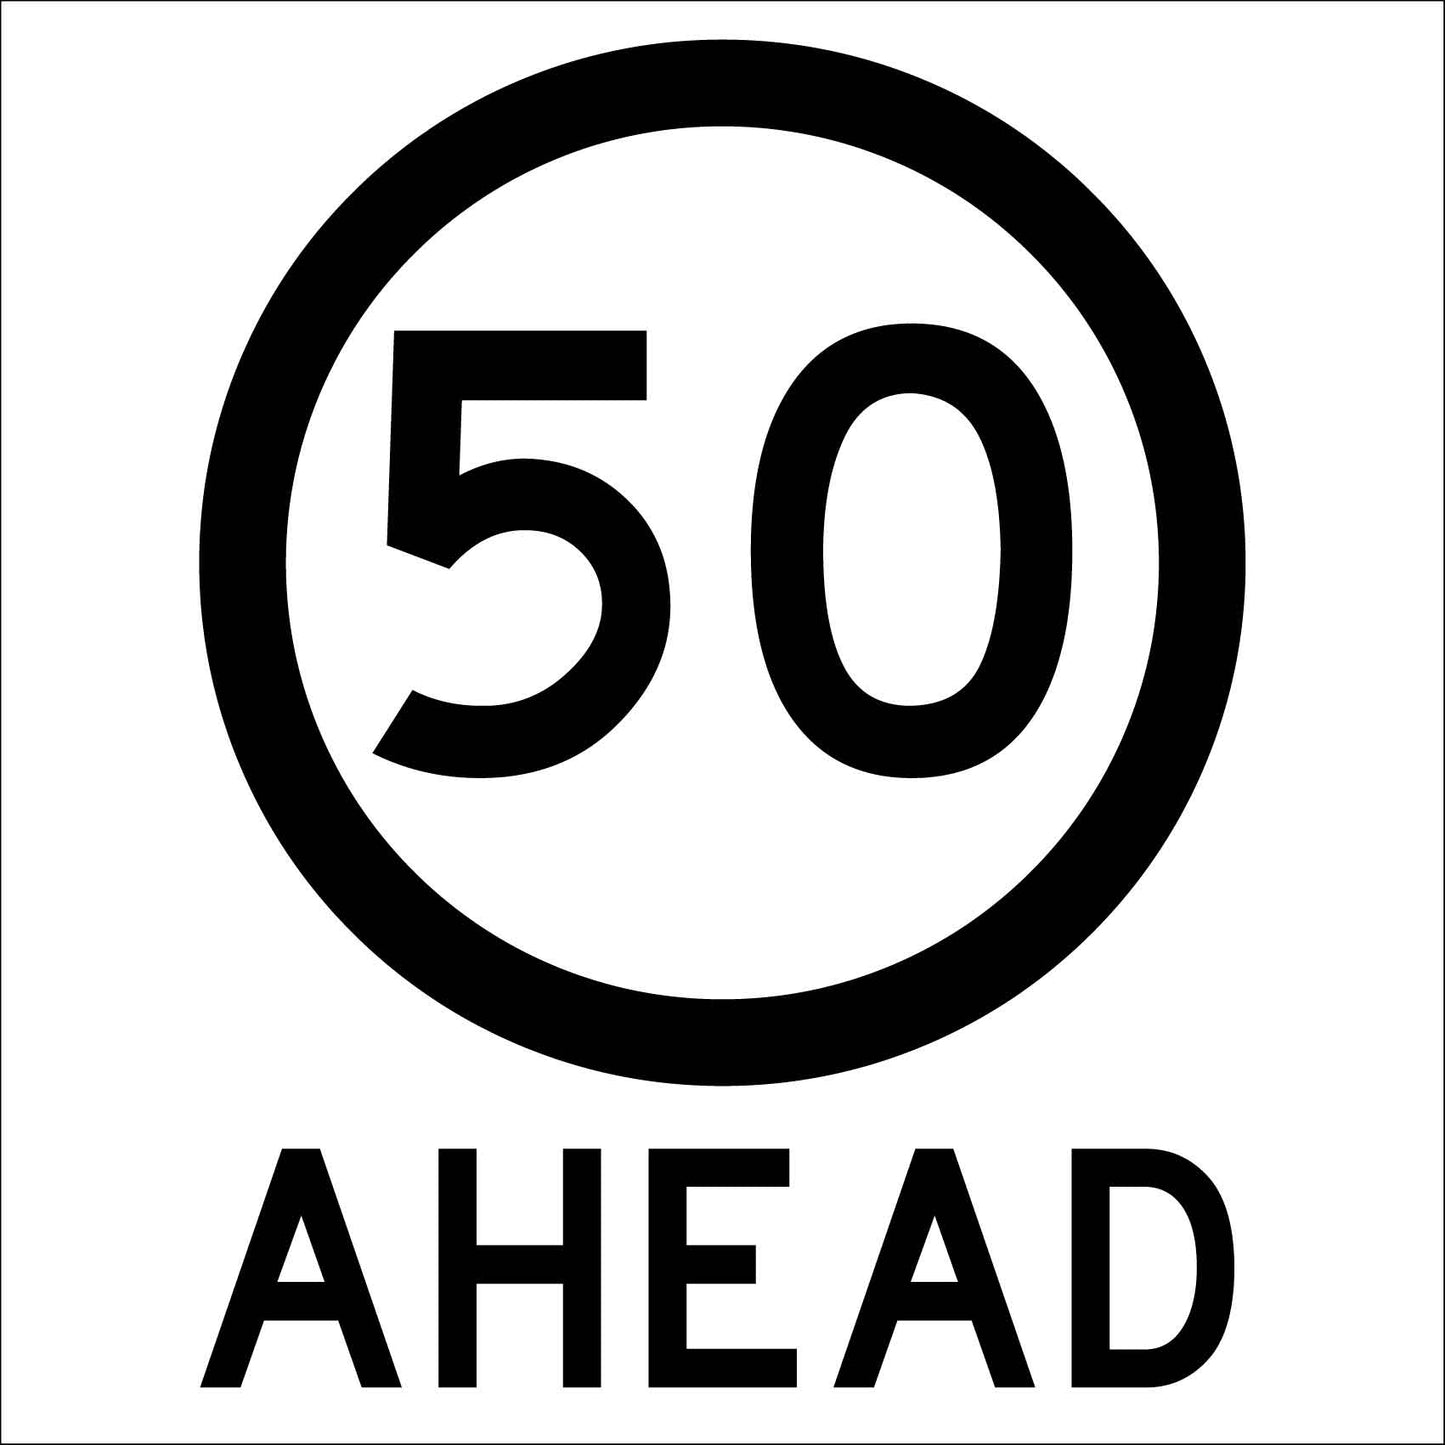 50km Ahead Multi Message Traffic Sign